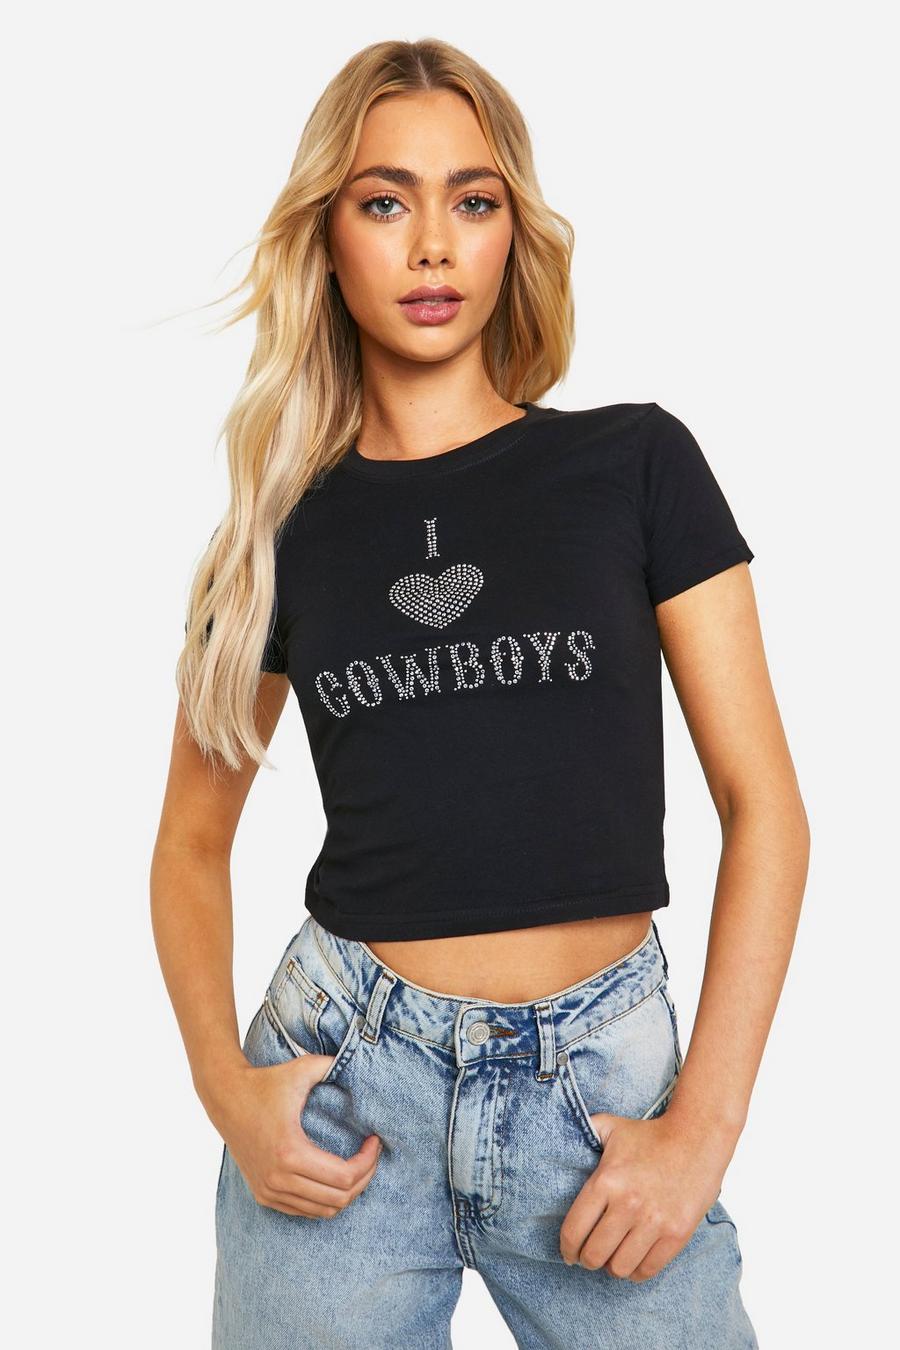 T-shirt da neonato Hotfix I Heart Cowboys, Black